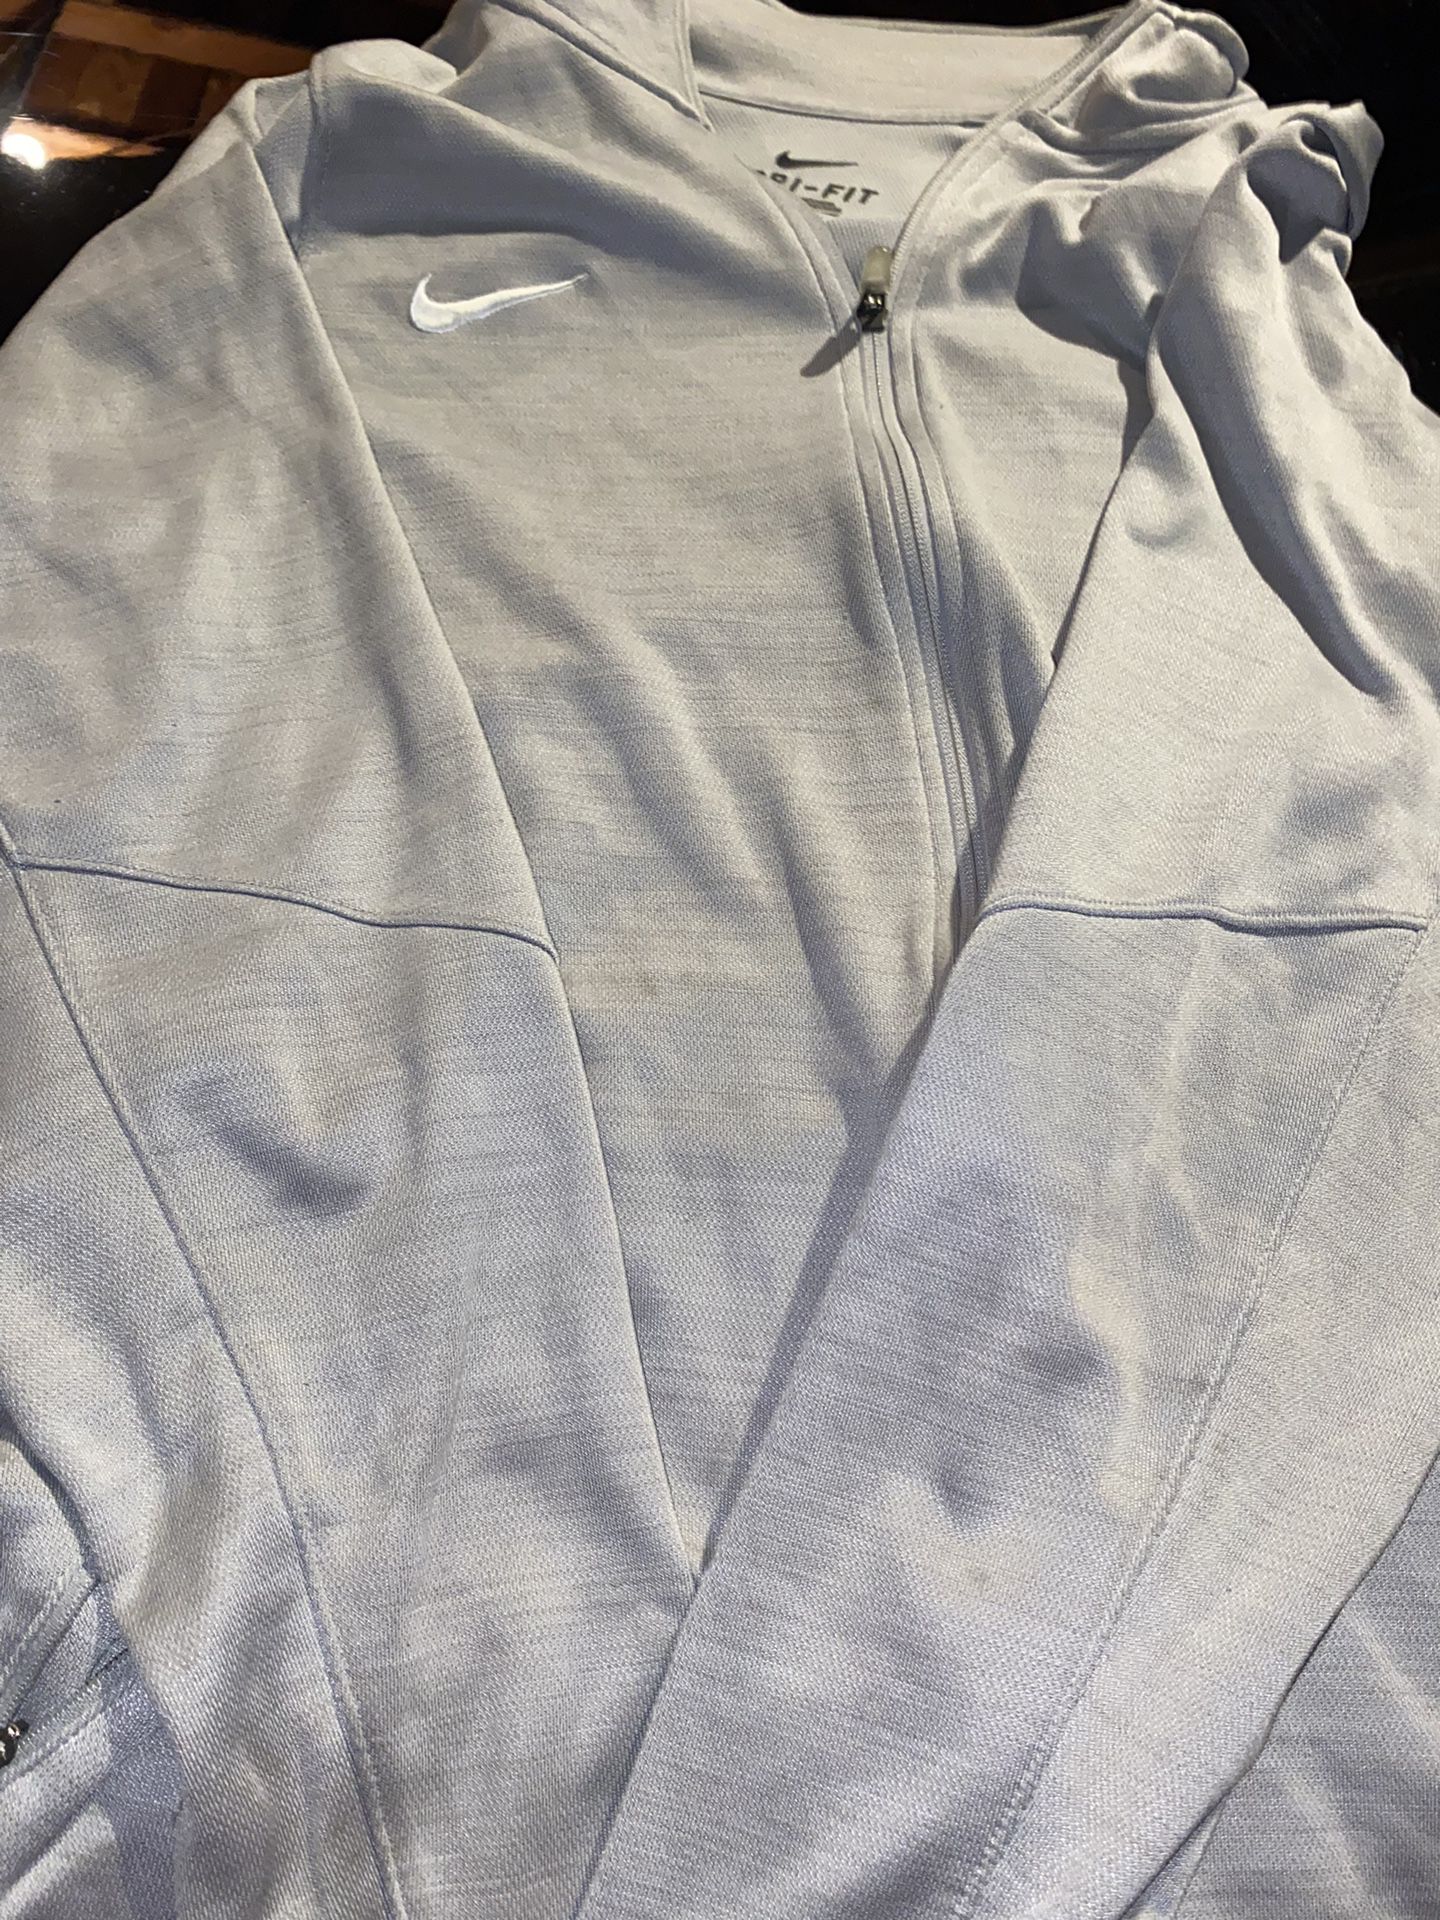 Nike Dri Fit Zip Up Jacket - Grey No Hoodie Size 2XL